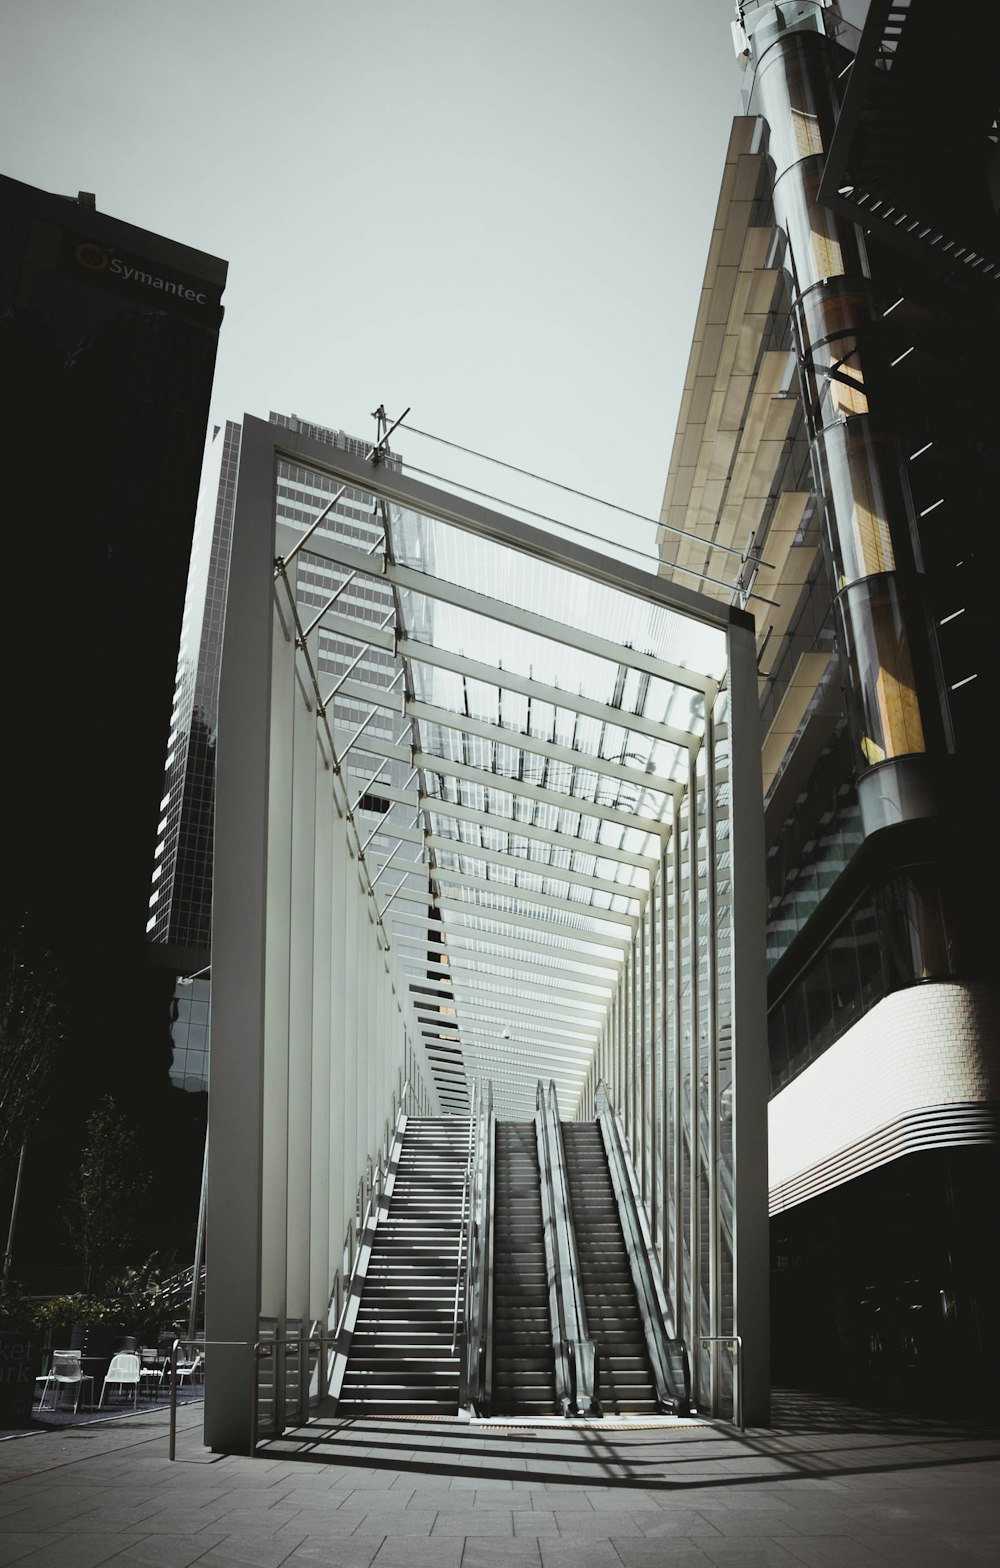 escalator outside between buildings